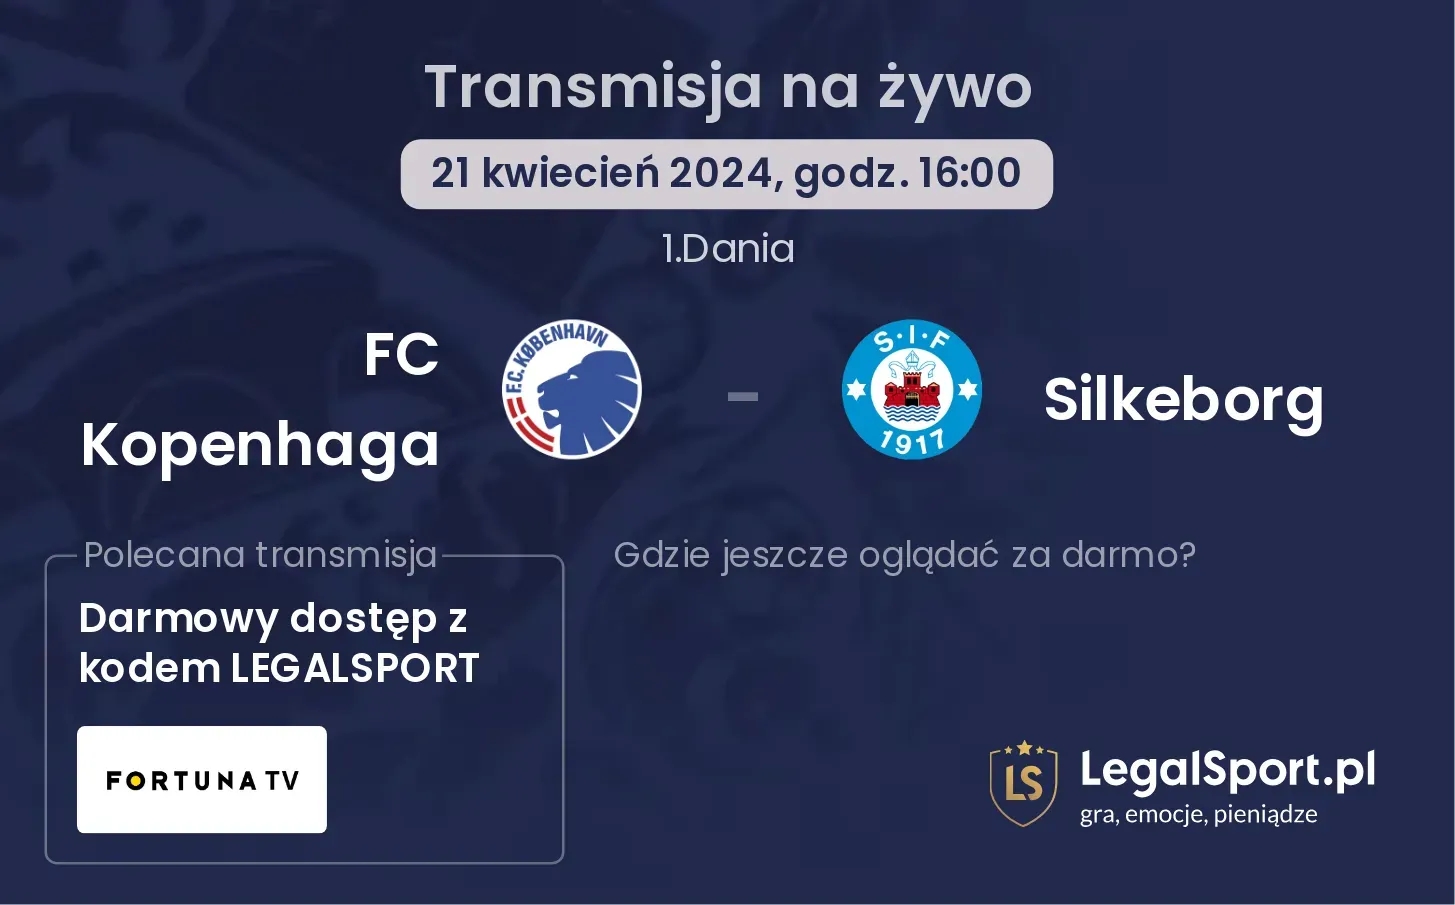 FC Kopenhaga - Silkeborg transmisja na żywo